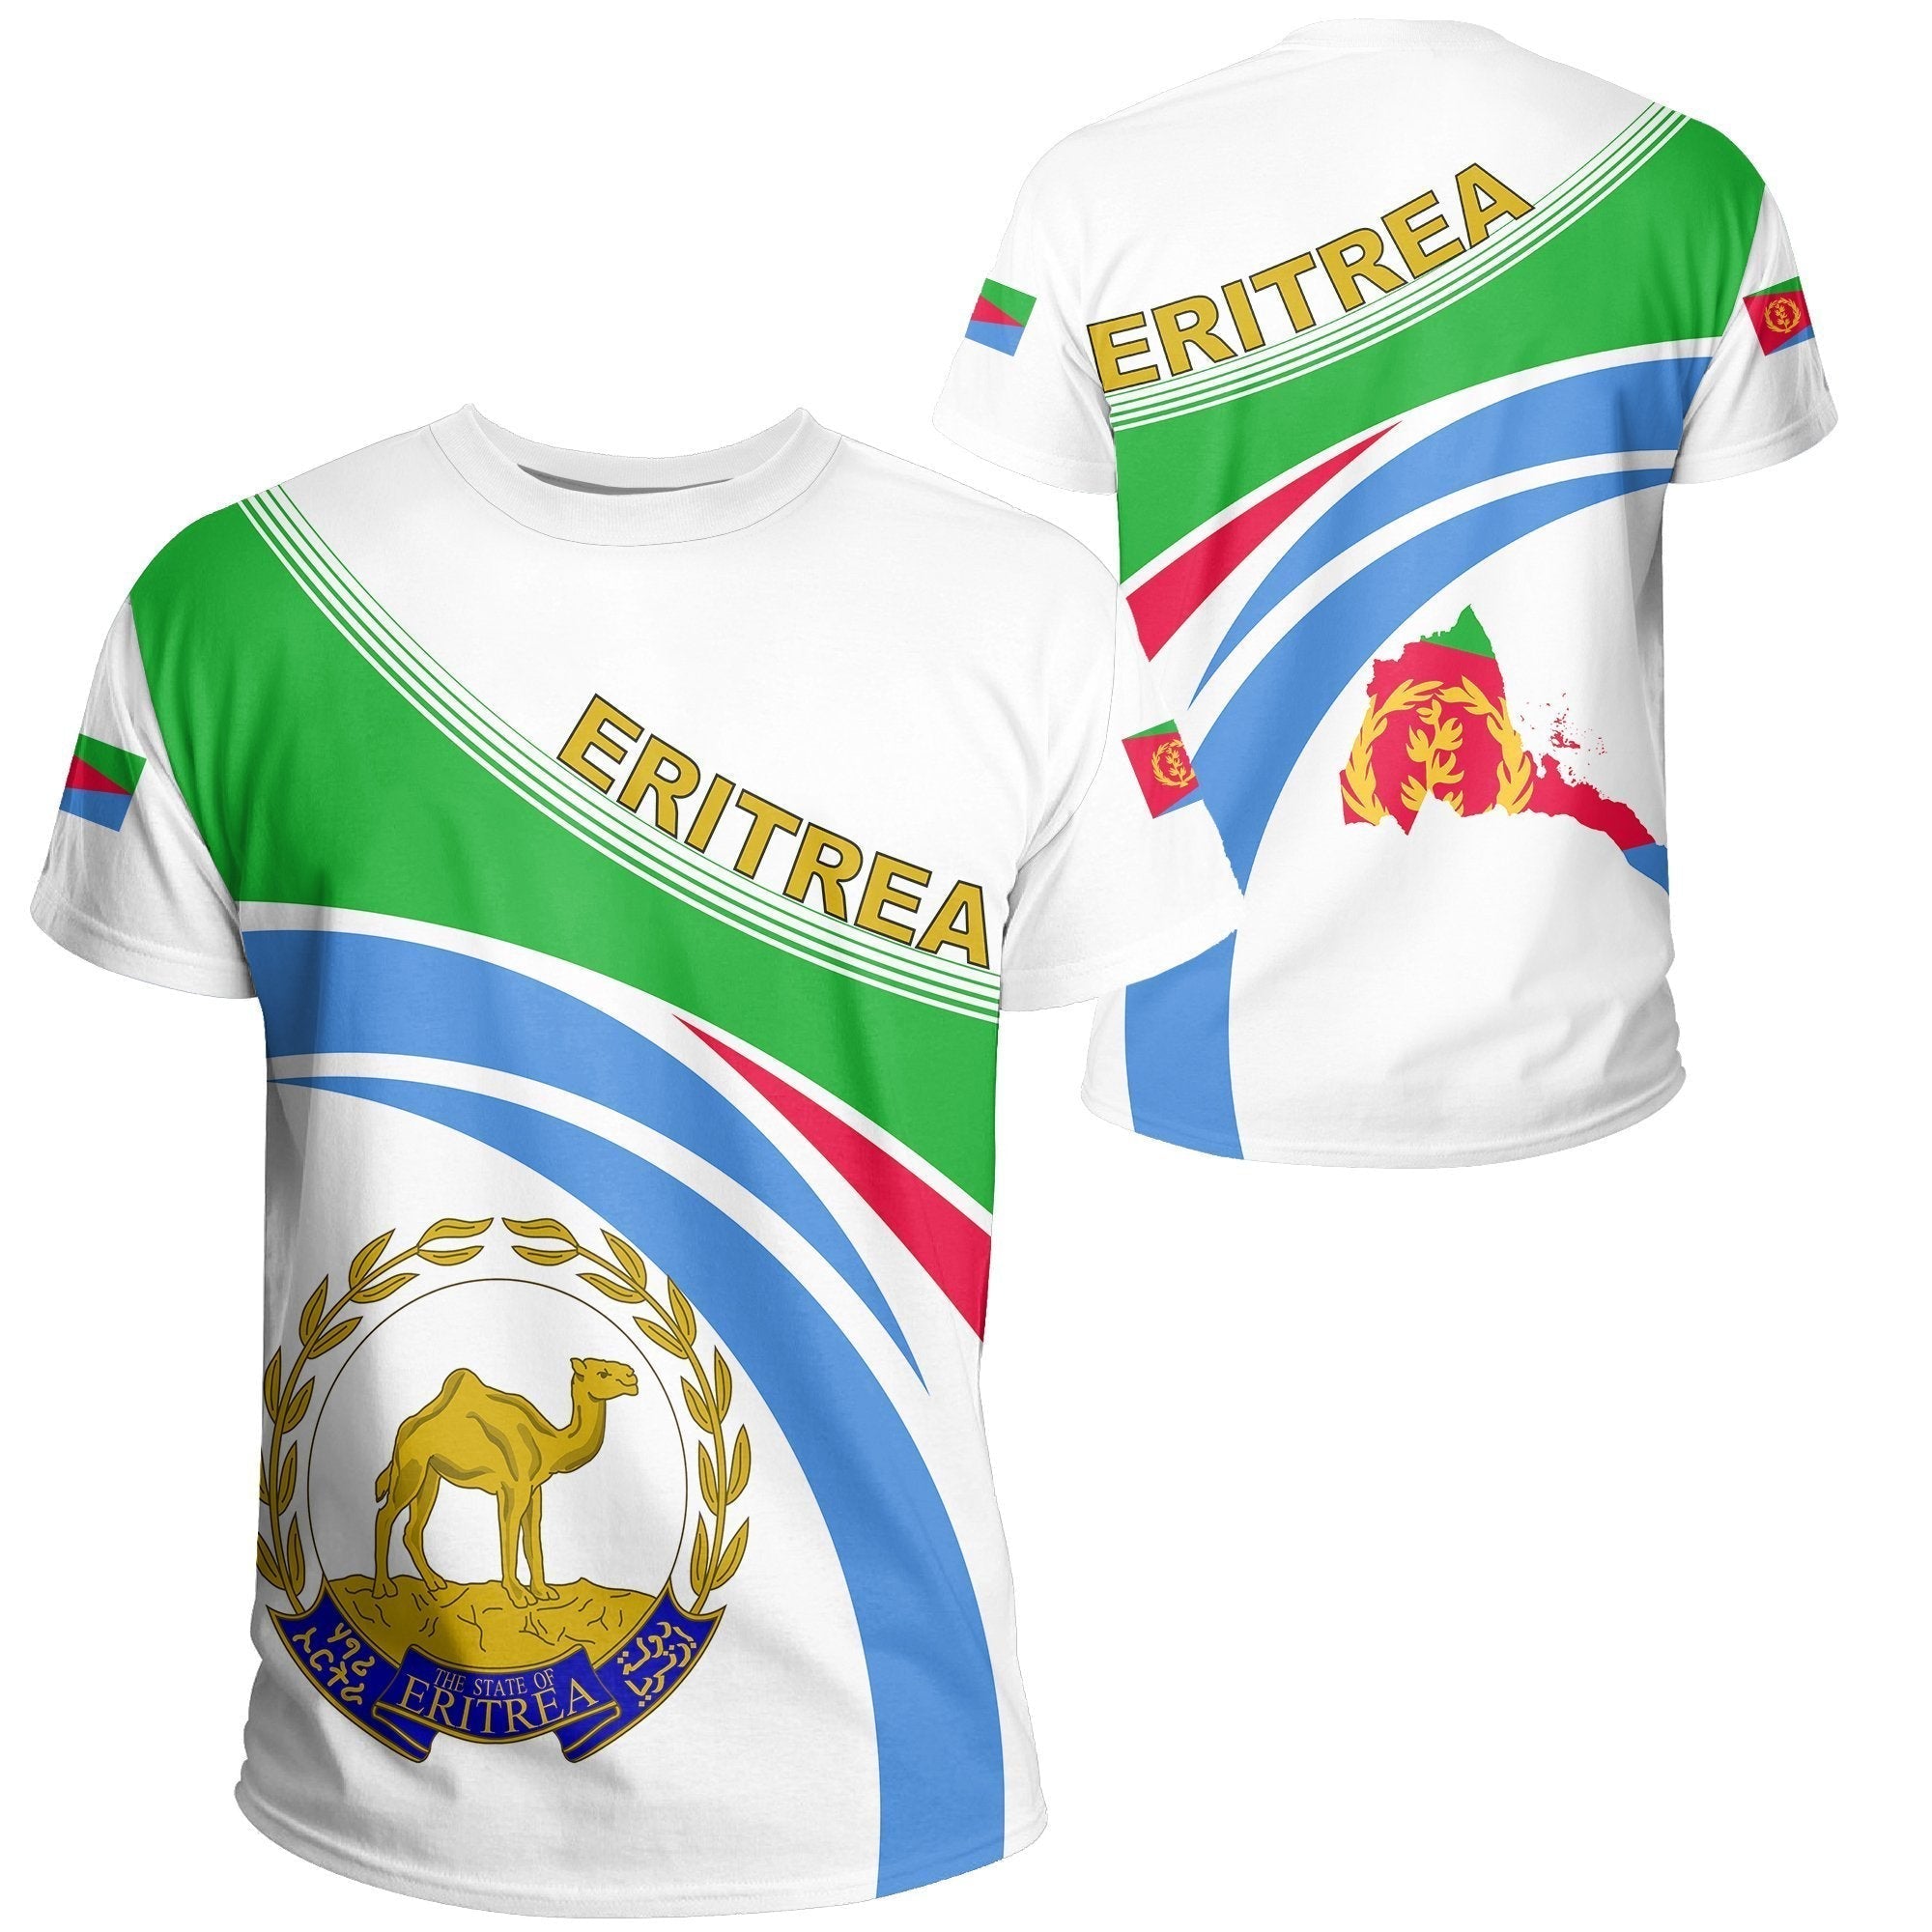 wonder-print-shop-t-shirt-eritrea-map-and-coat-of-arms-tee